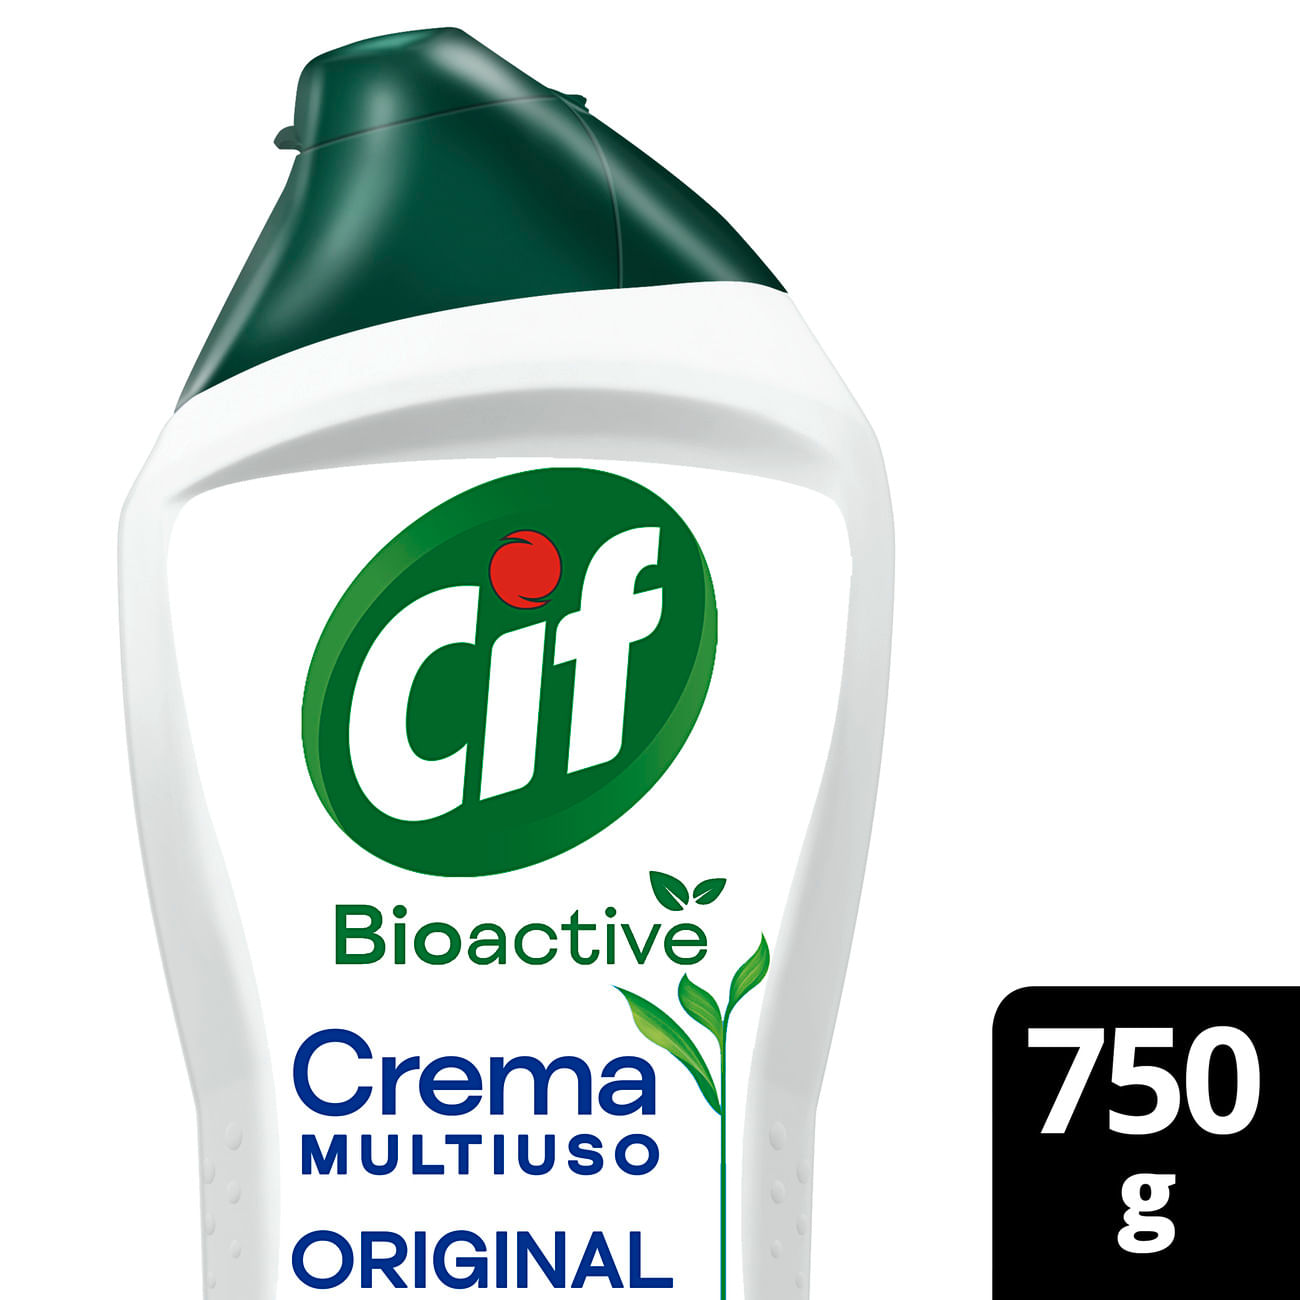 Cif Crema Original limpiador multiusos